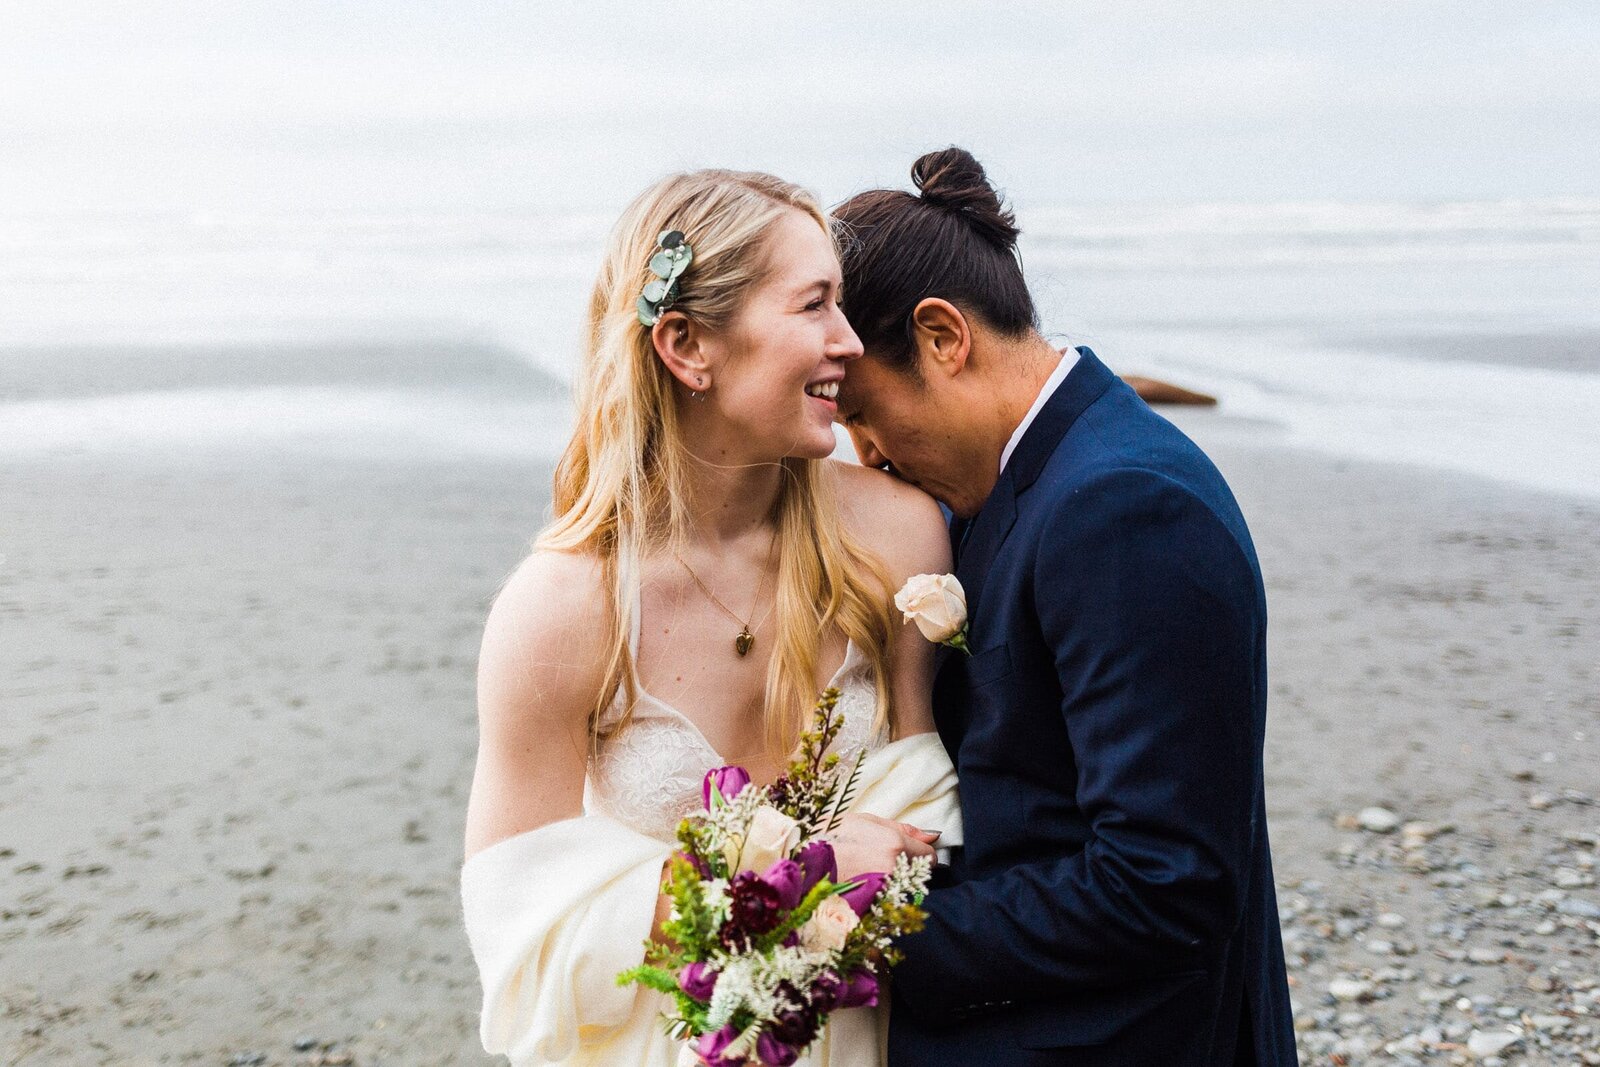 groom kissing bride on shoulder at beach